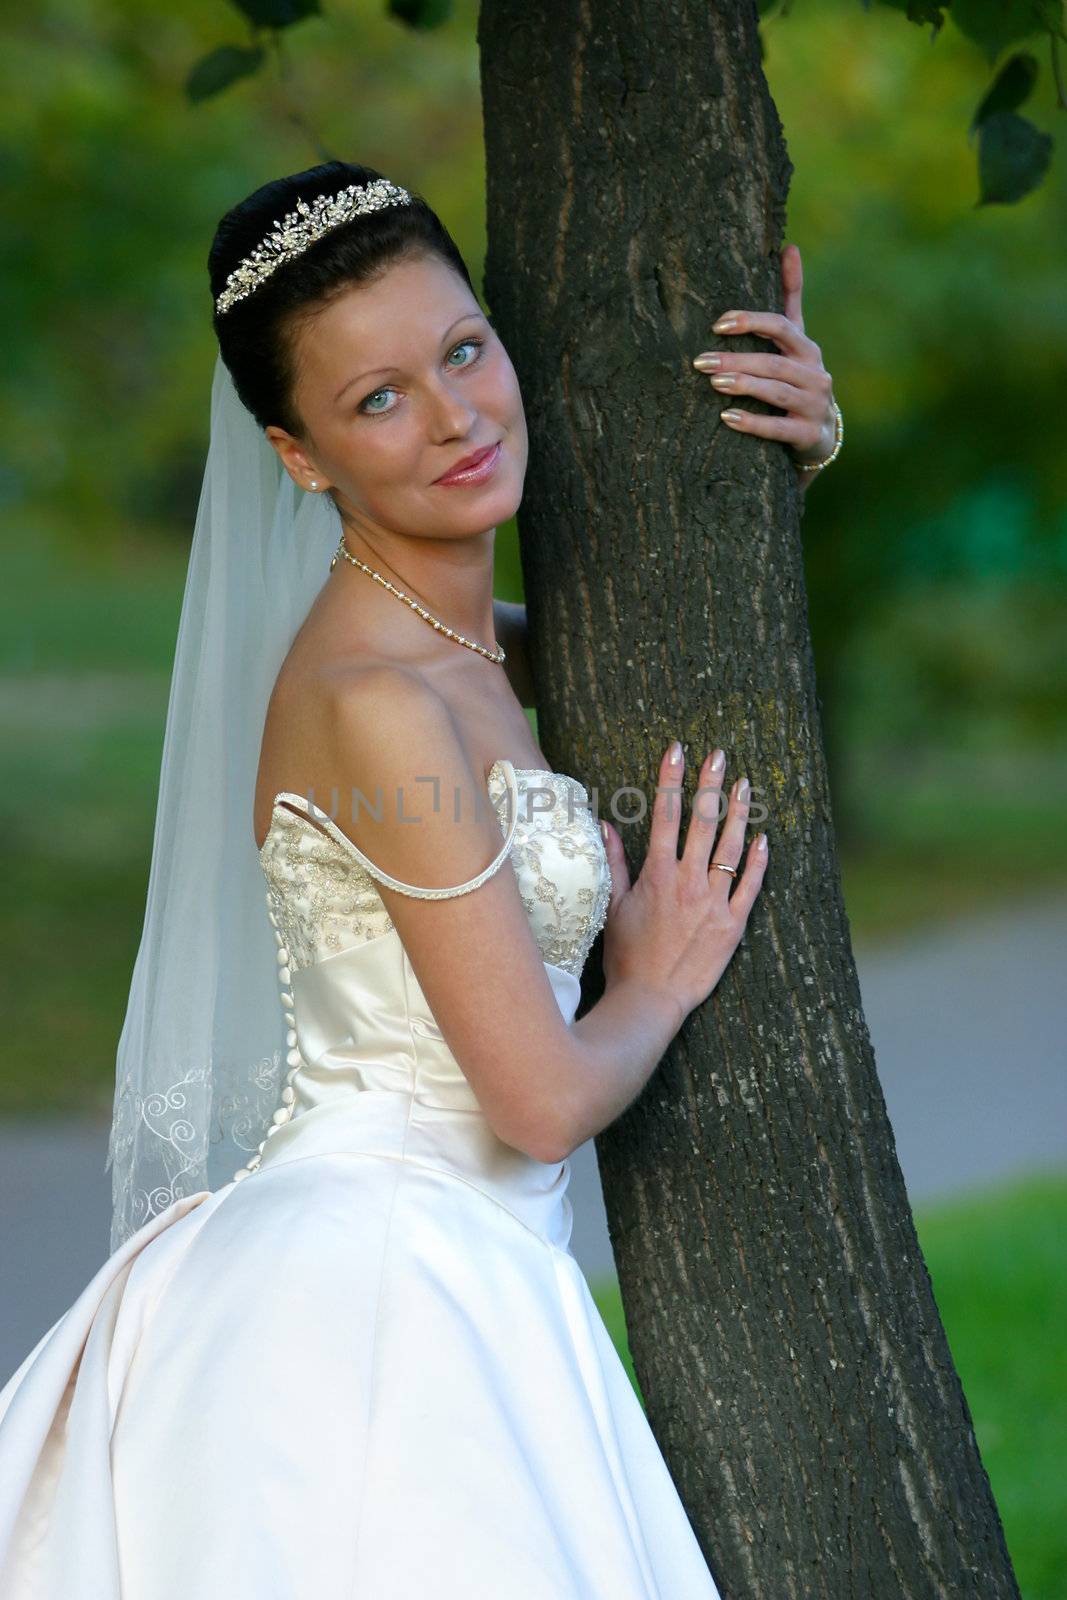 Portrait of the beautiful bride worth near a tree